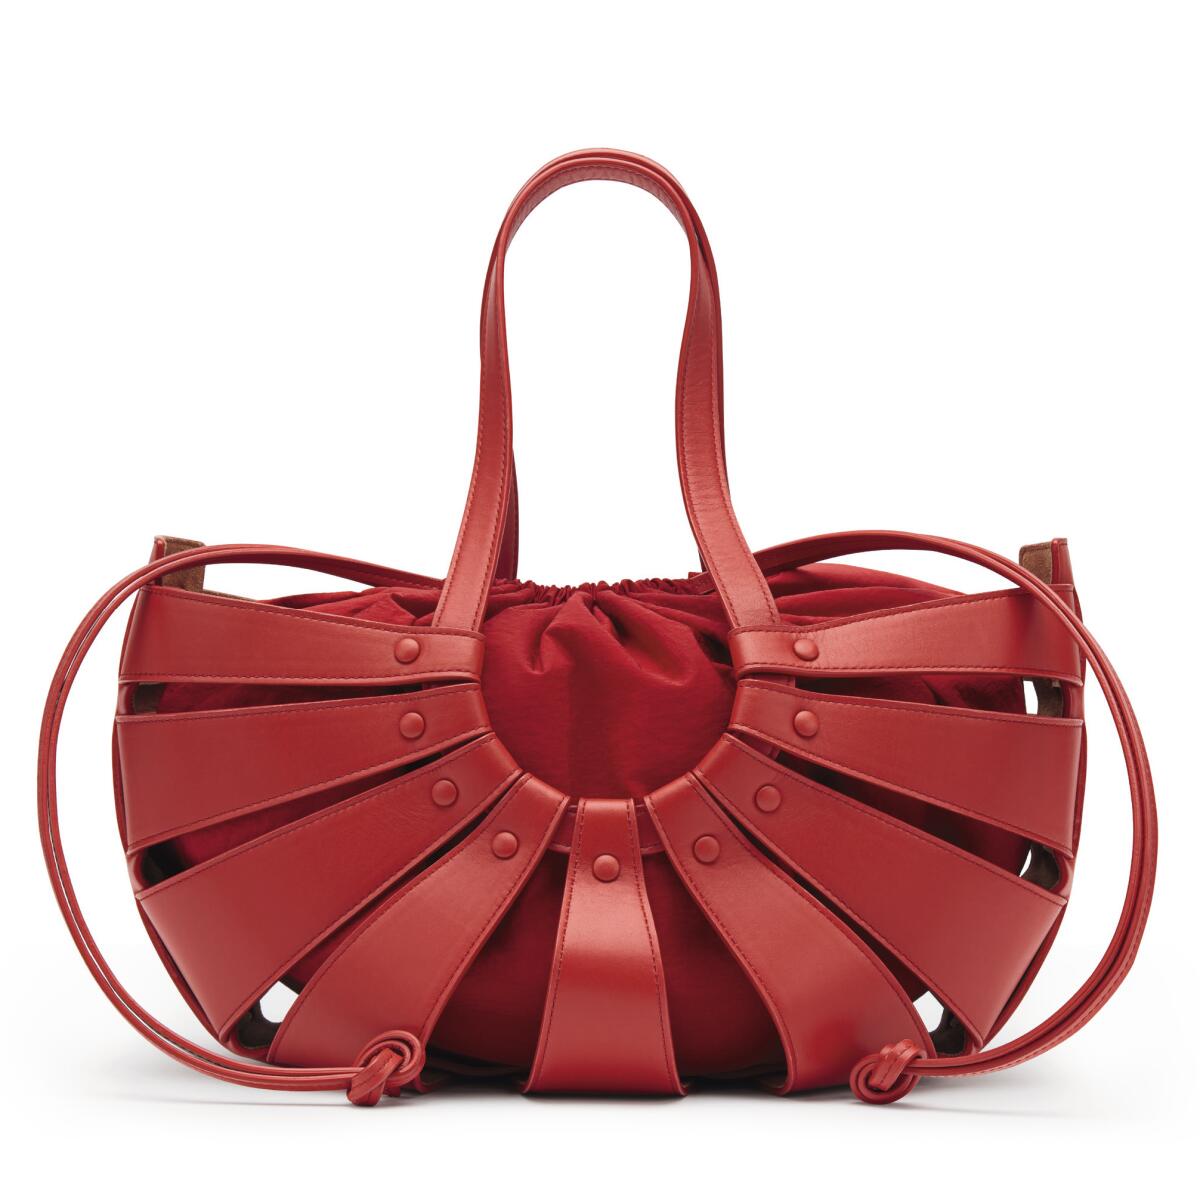 Bottega Veneta's Wardrobe 01 Collection bag.